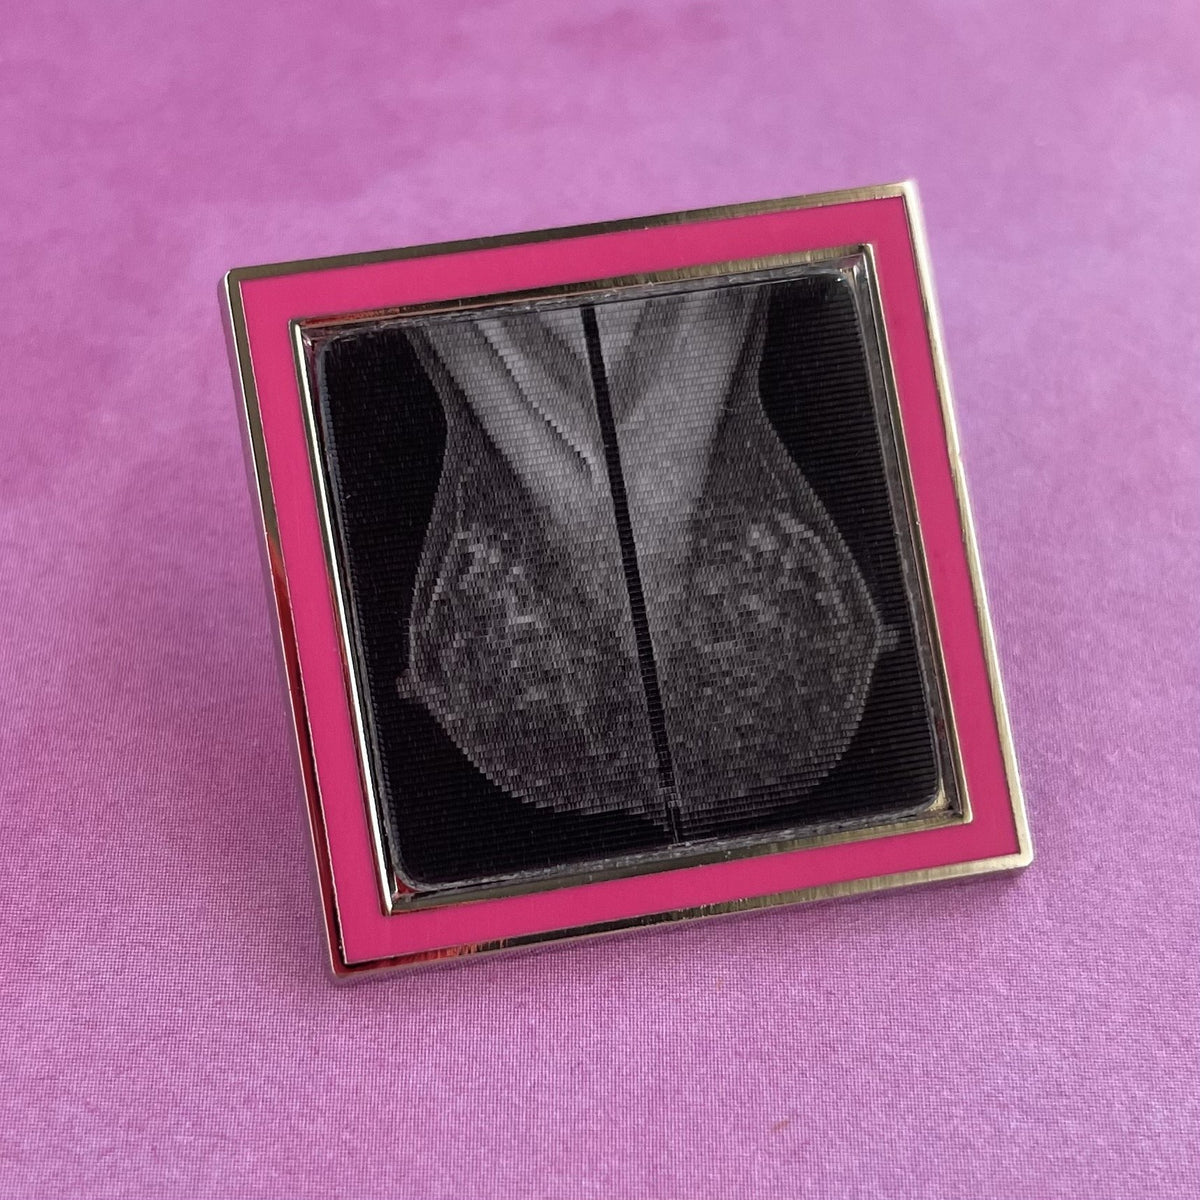 Mammography Pin Pack - Rad Girl Creations